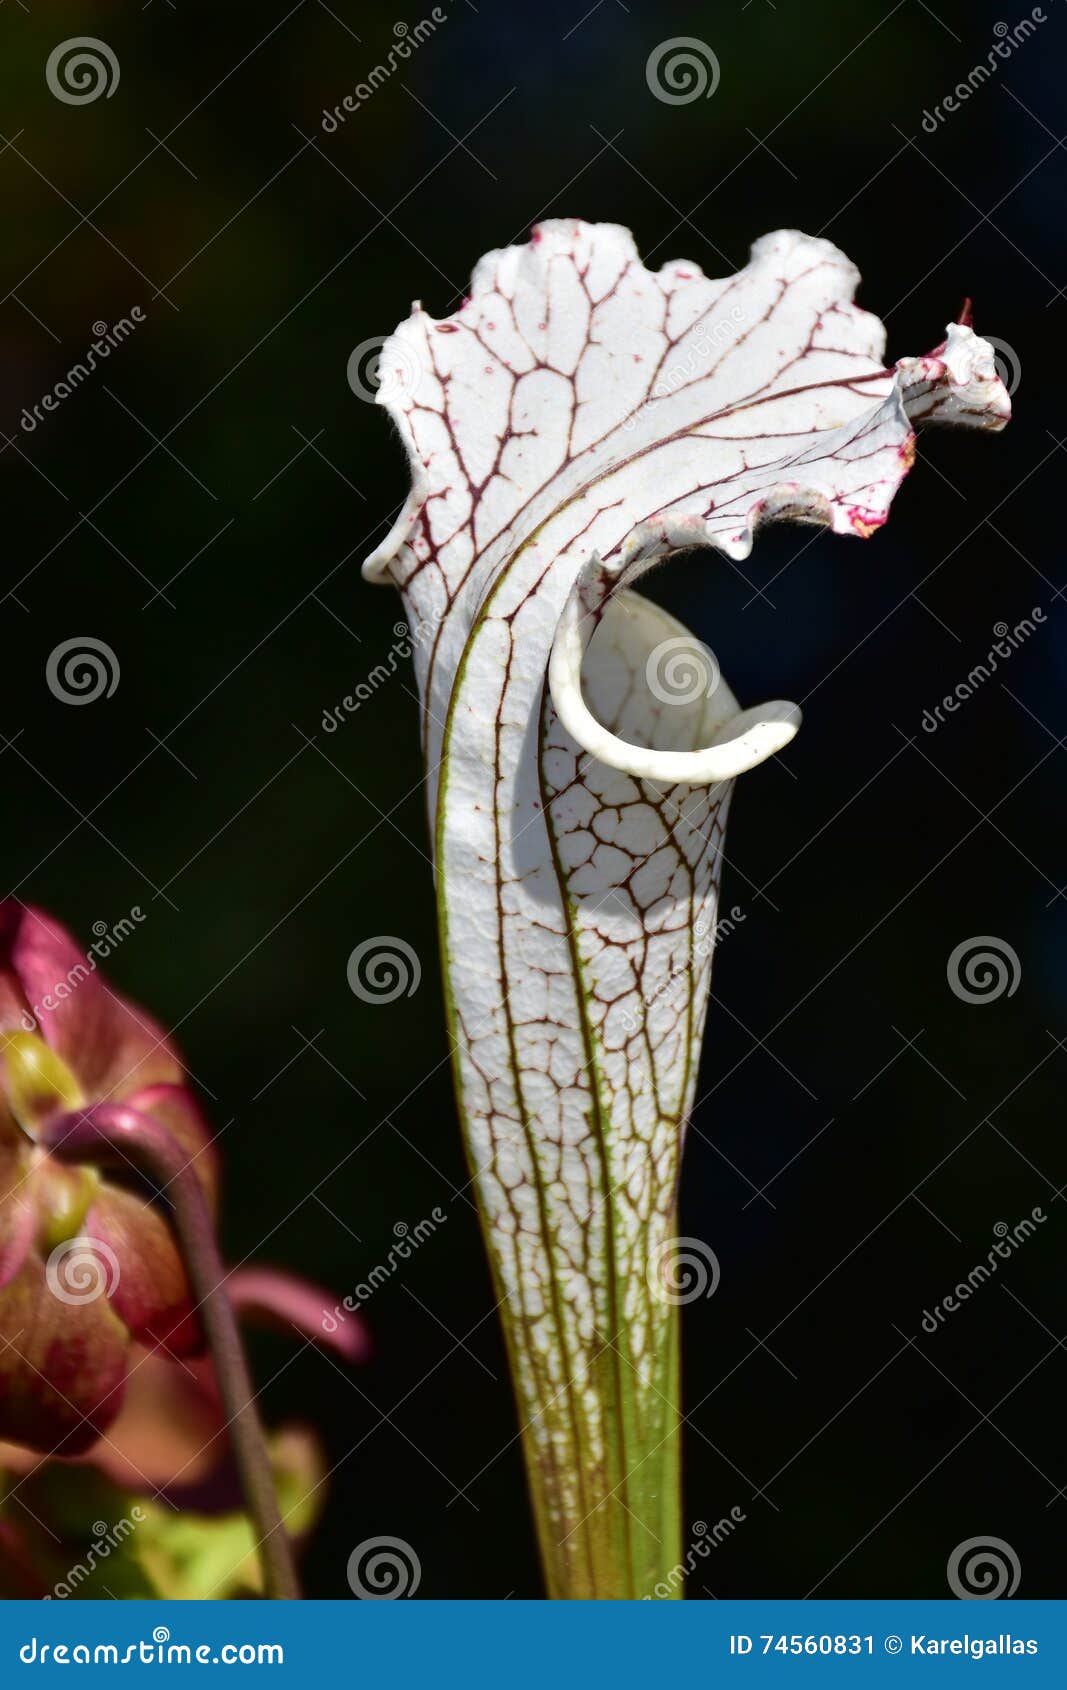 sarracenia leucophylla,carnivore plant